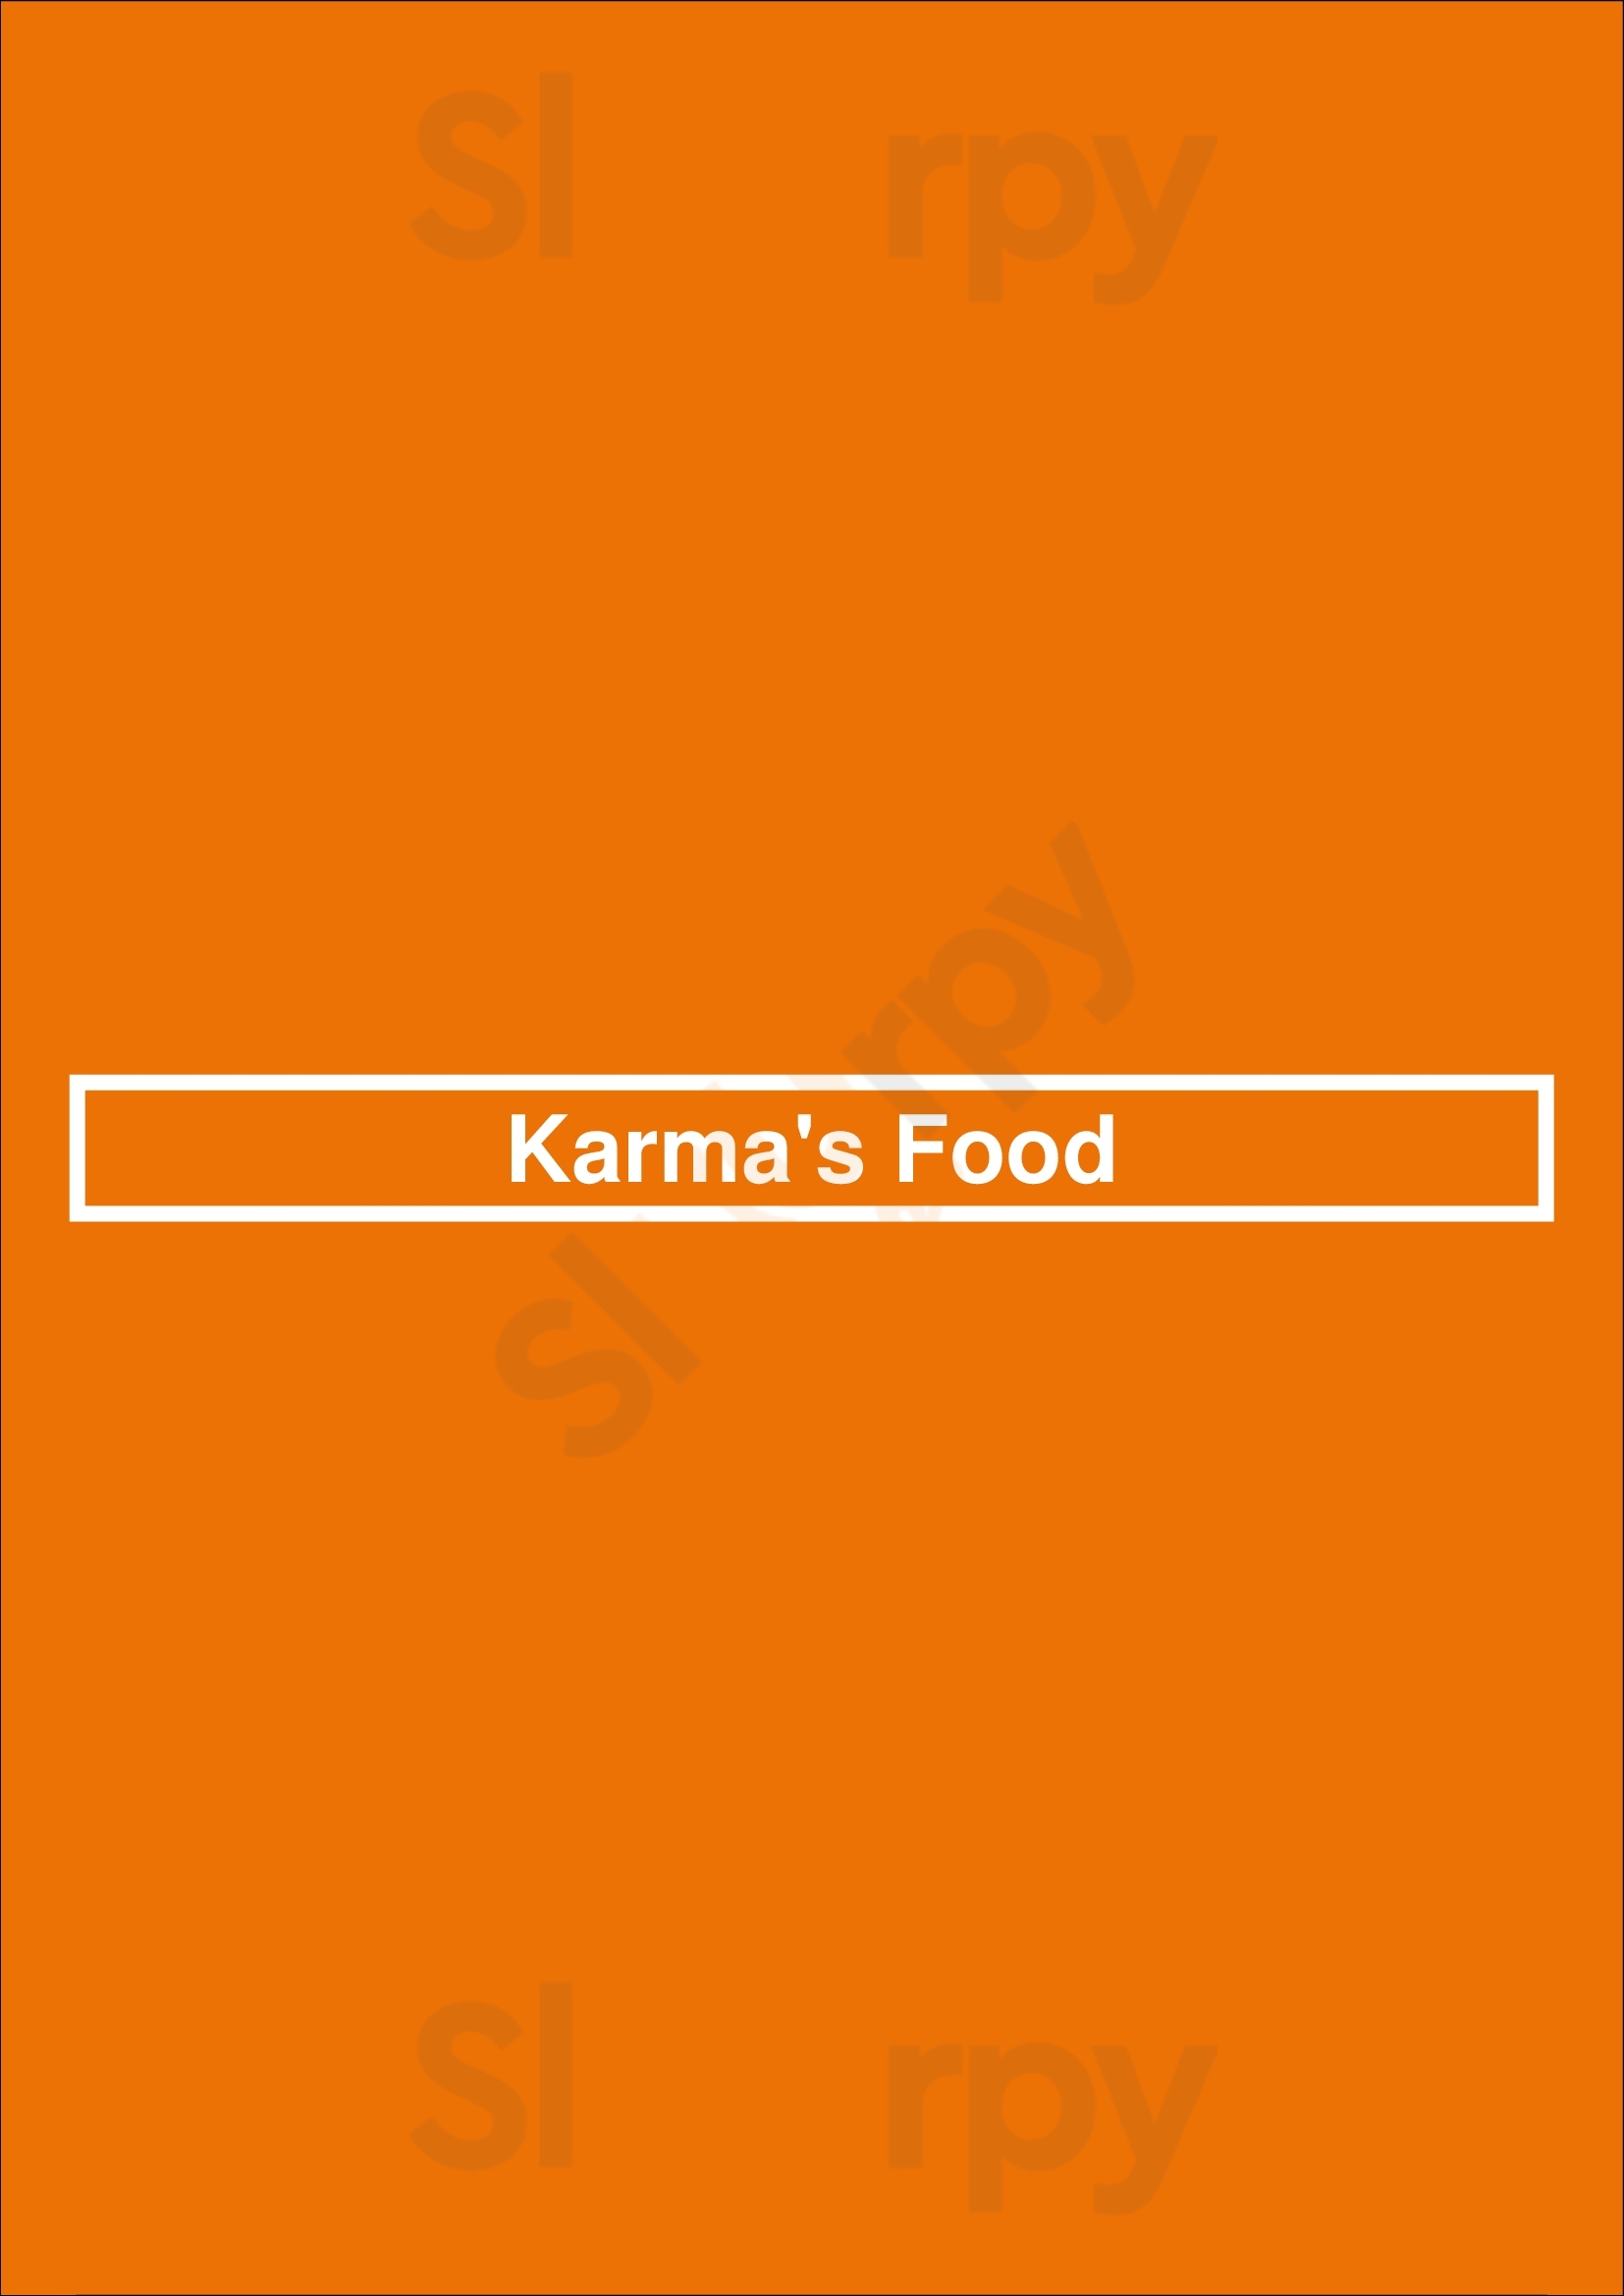 Karma's Food Porto Menu - 1